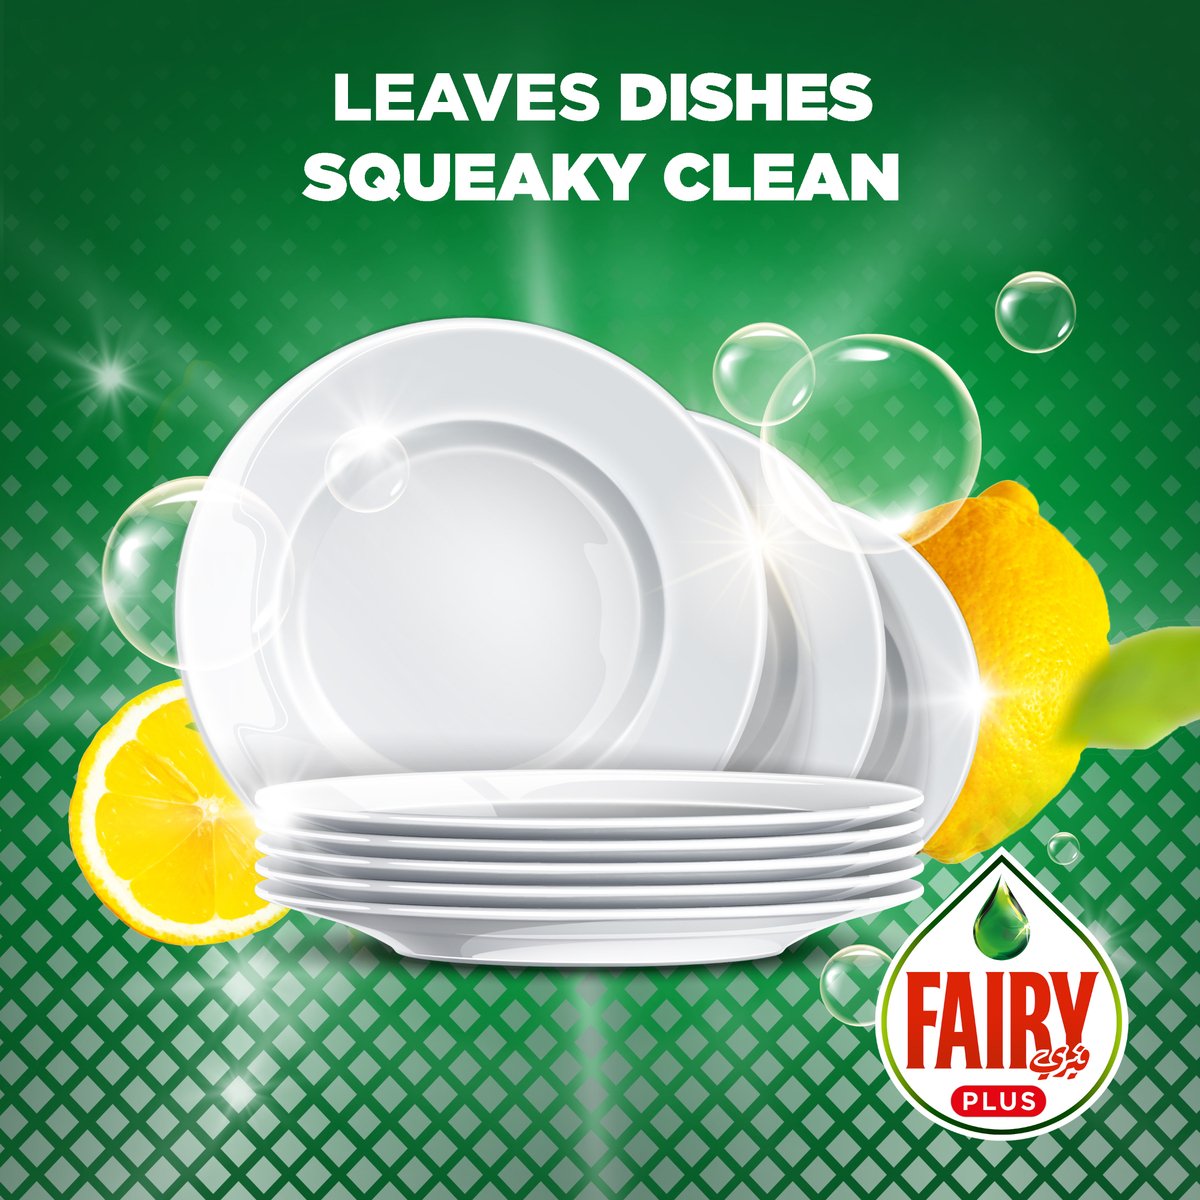 Fairy Plus Lemon Dishwashing Liquid Soap with Alternative Power To Bleach Value Pack 3 x 600ml